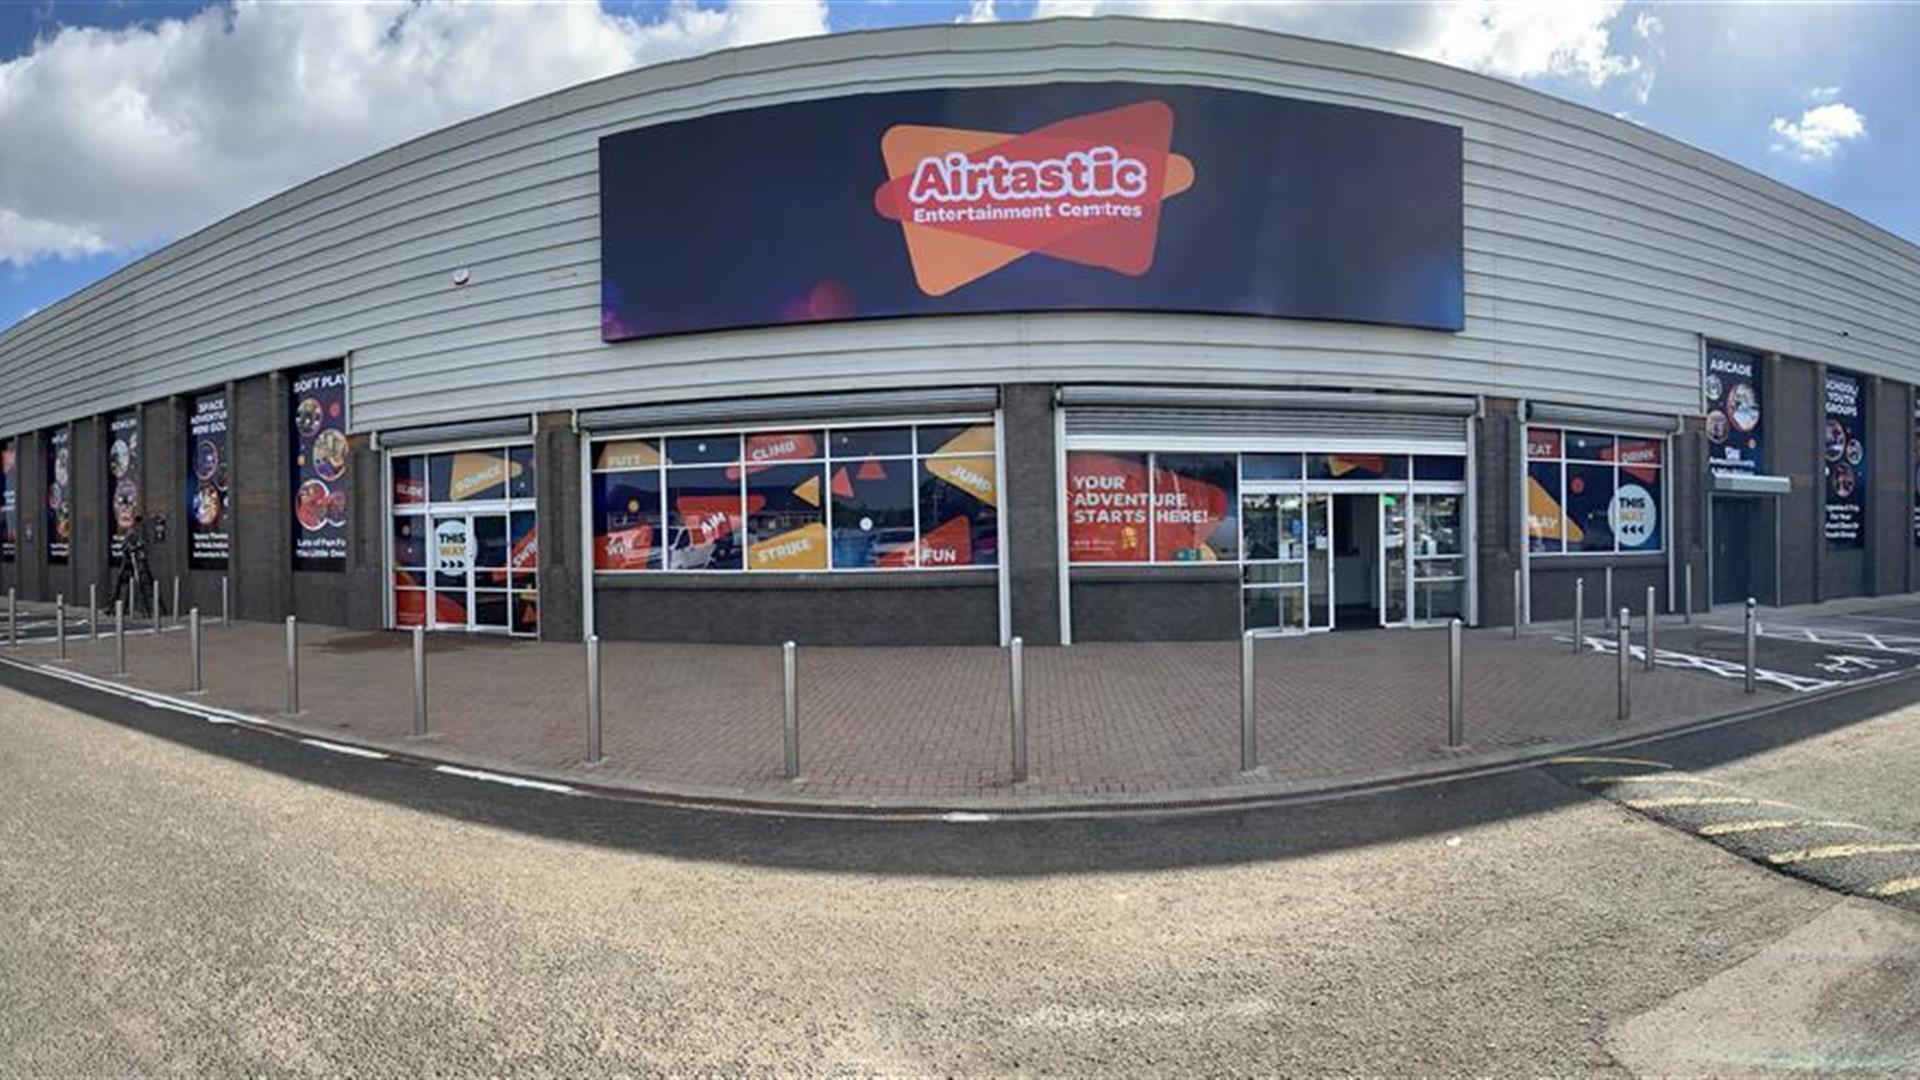 Airtastic Entertainment Centre Newtownabbey